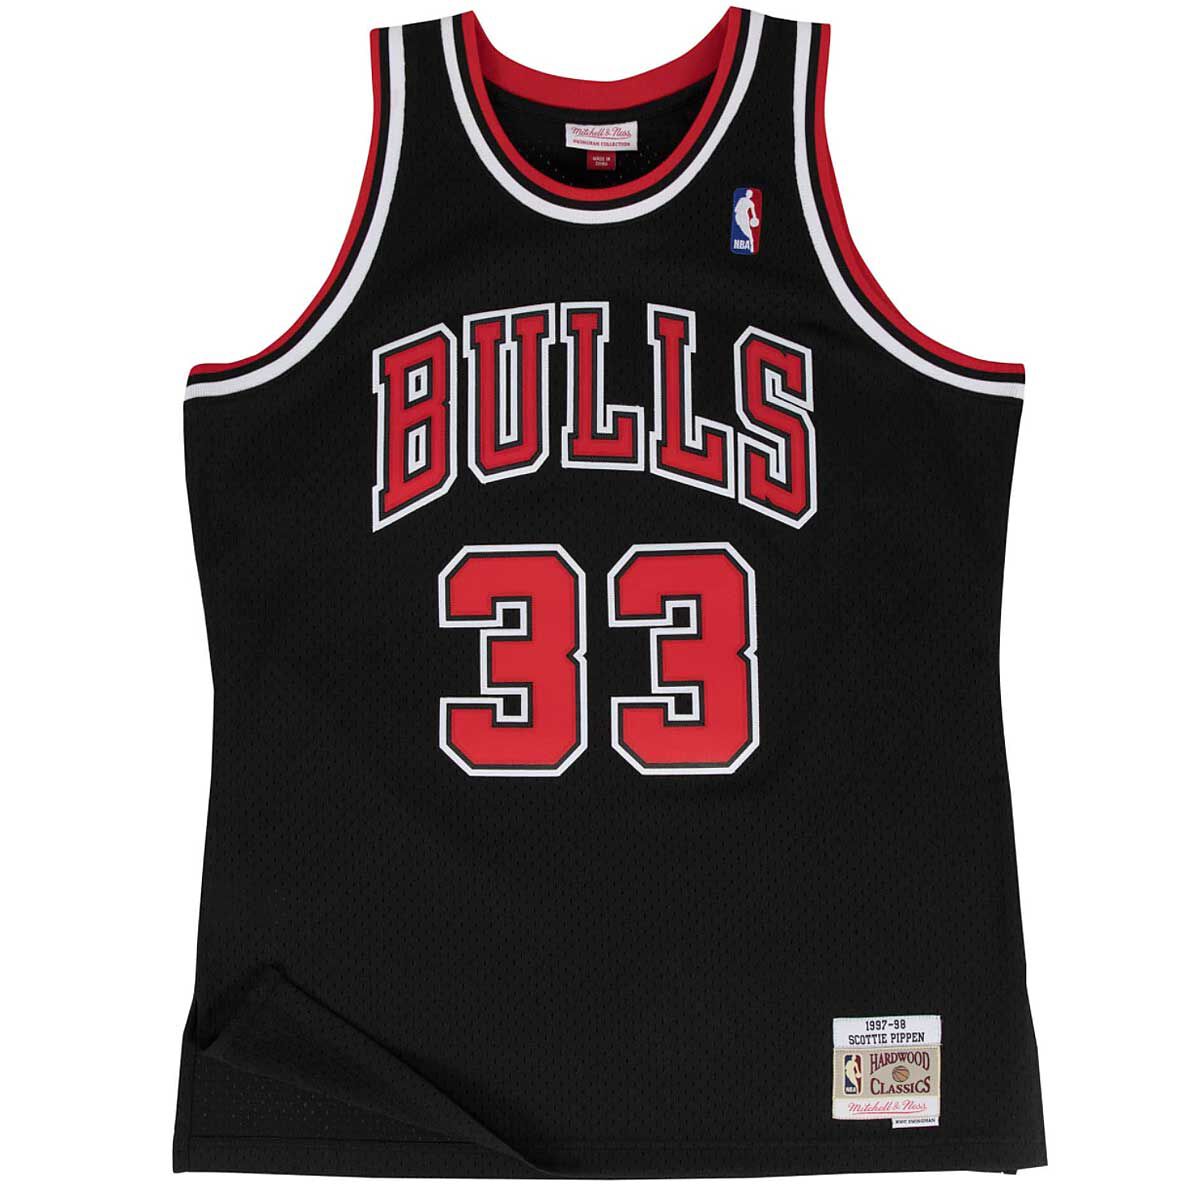 Scottie Pippen Chicago Bulls Vintage Throwback Swingman Jersey Black 